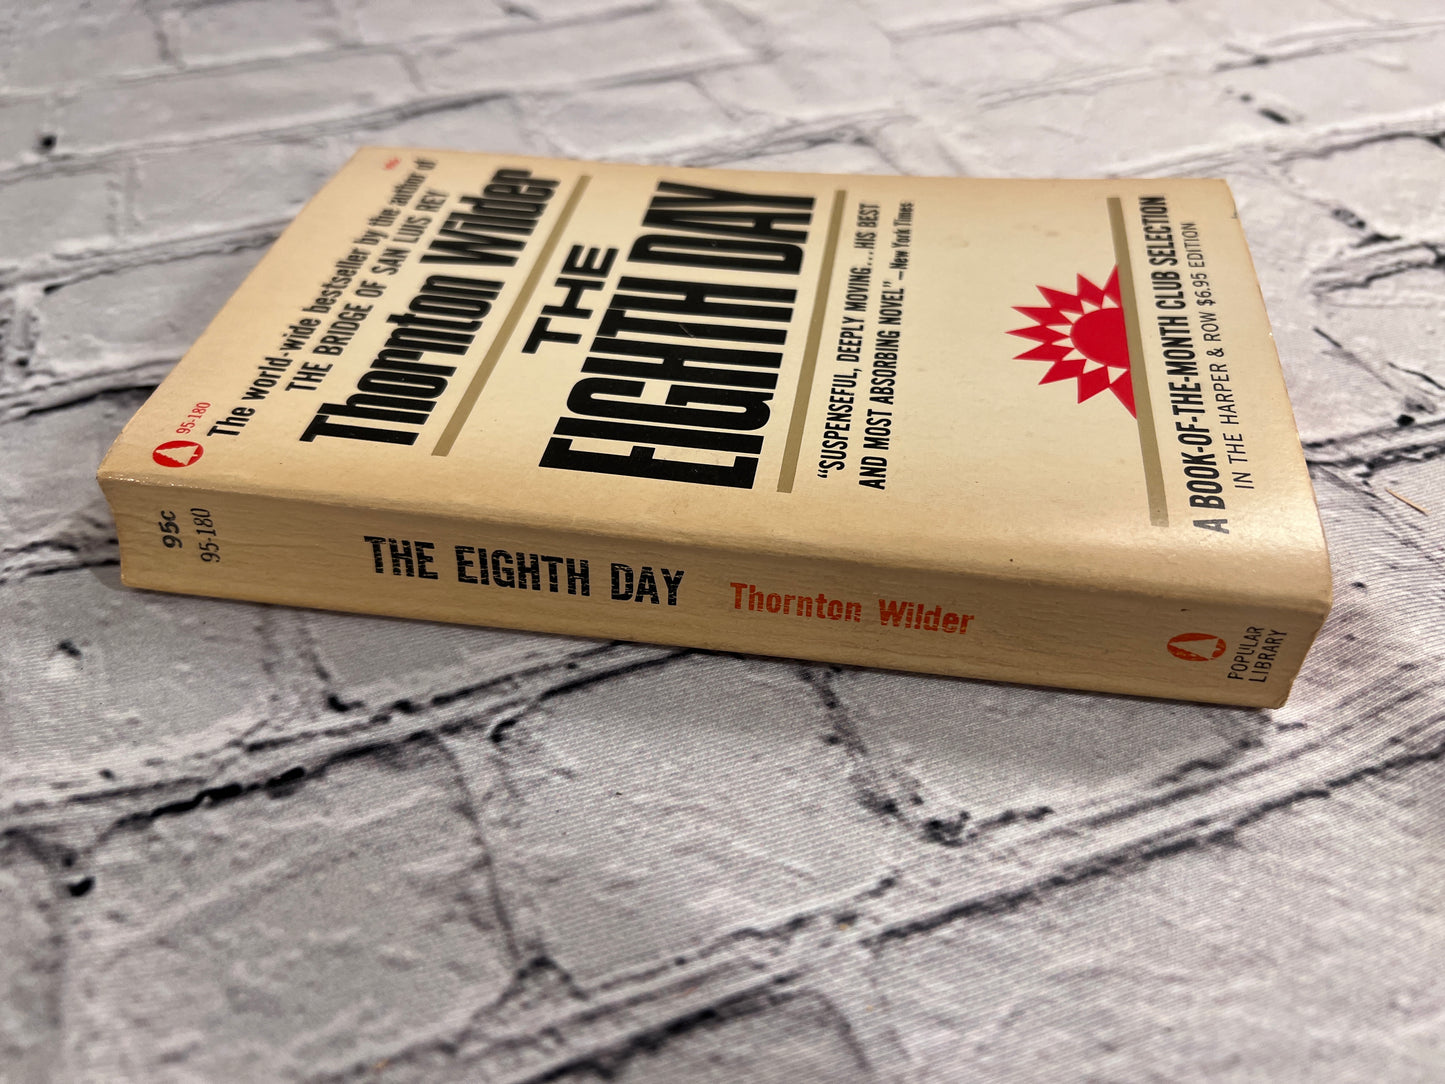 The Eighth Day by Thornton Wilder